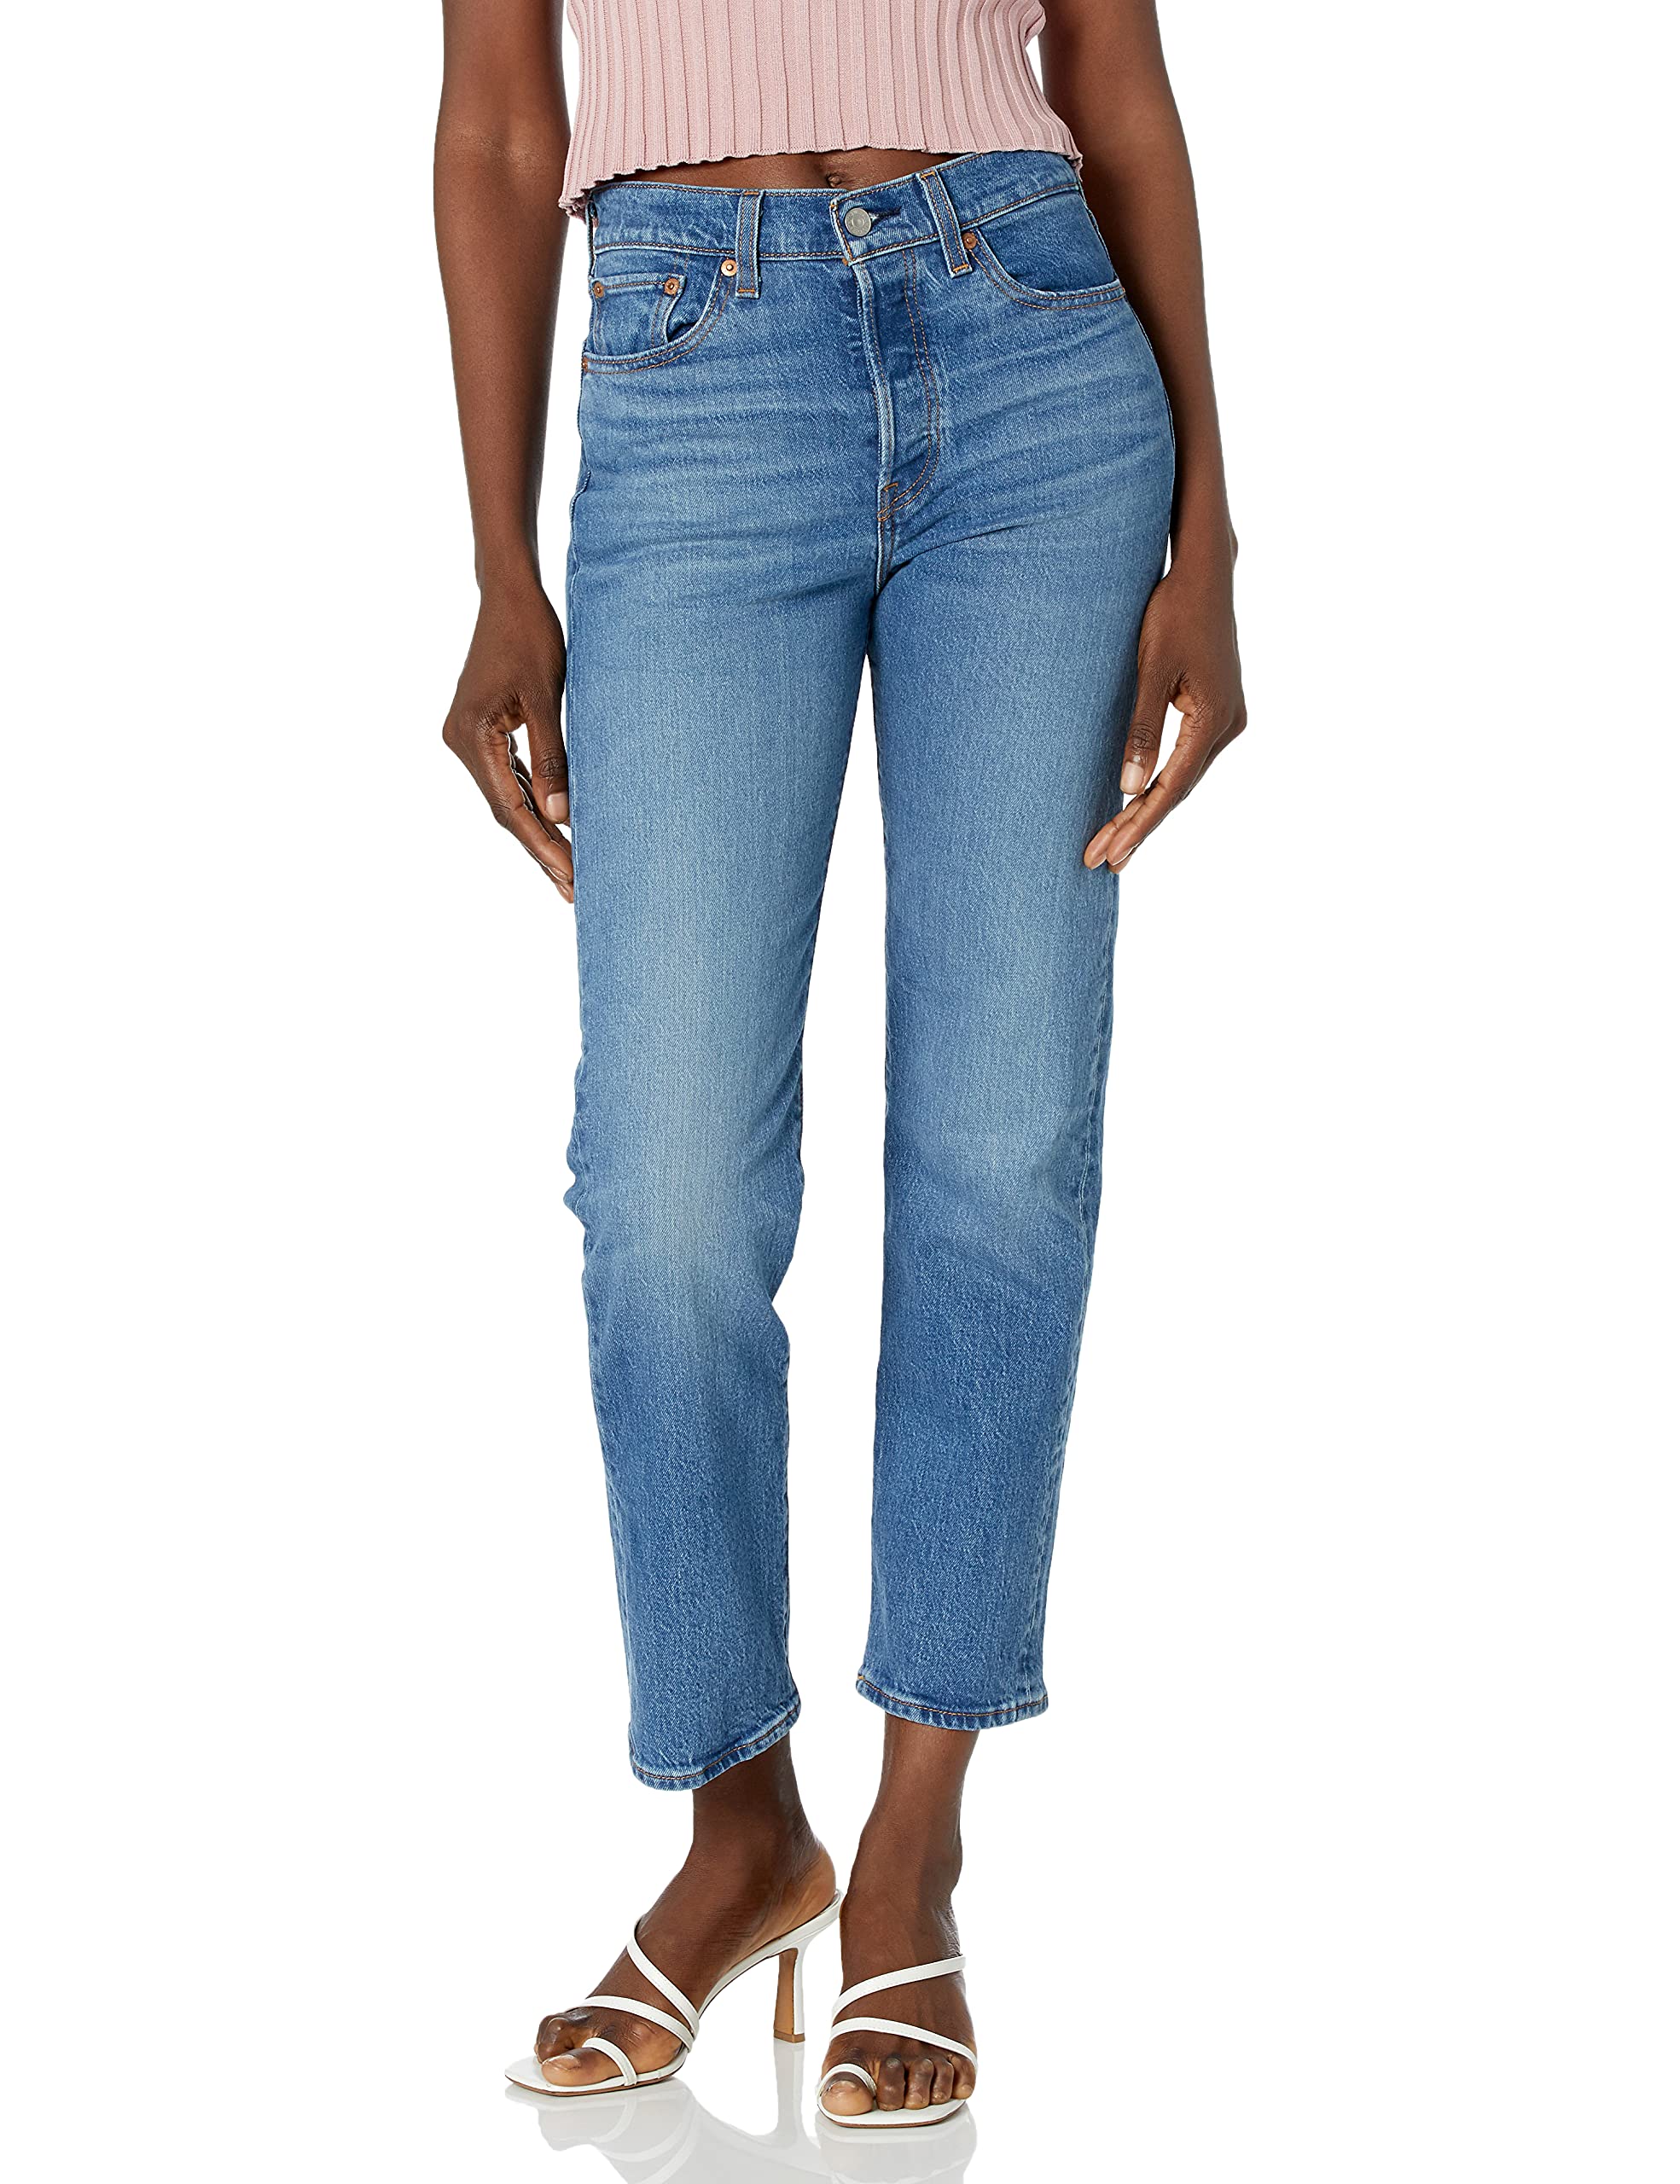 Mua Levi's Women's Premium Wedgie Straight Jeans trên Amazon Mỹ chính hãng  2023 | Giaonhan247